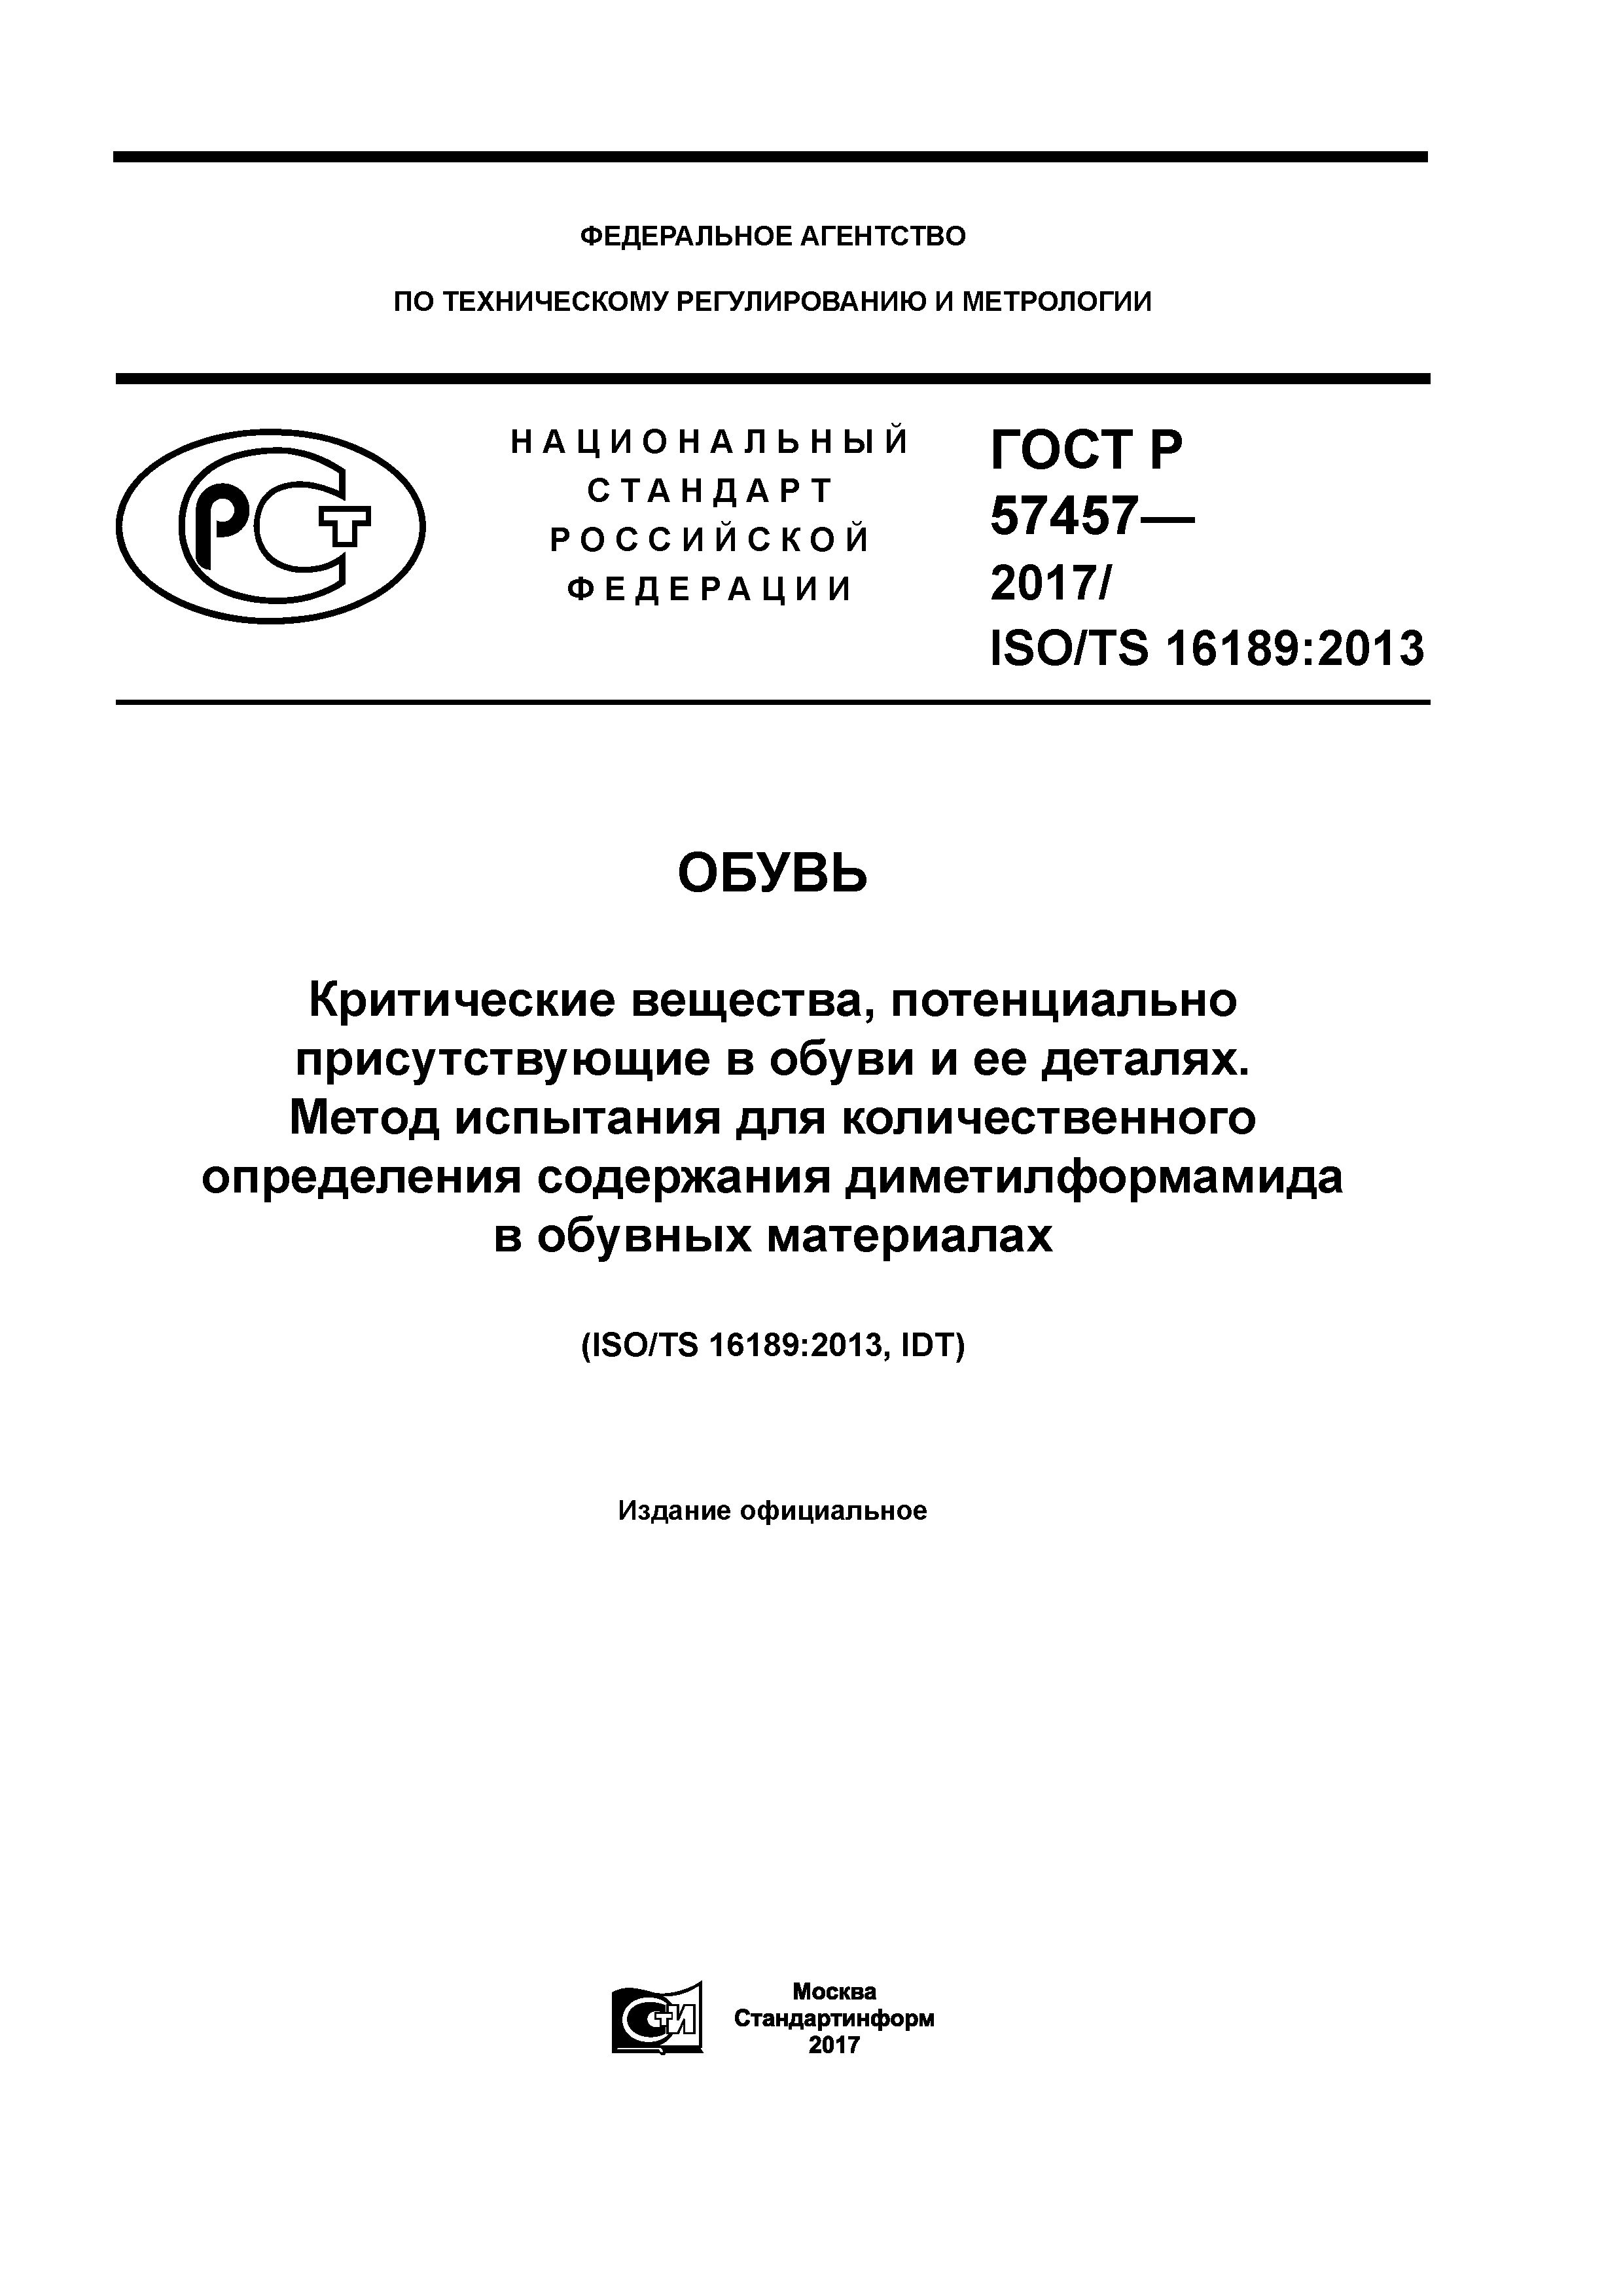 ГОСТ Р 57457-2017